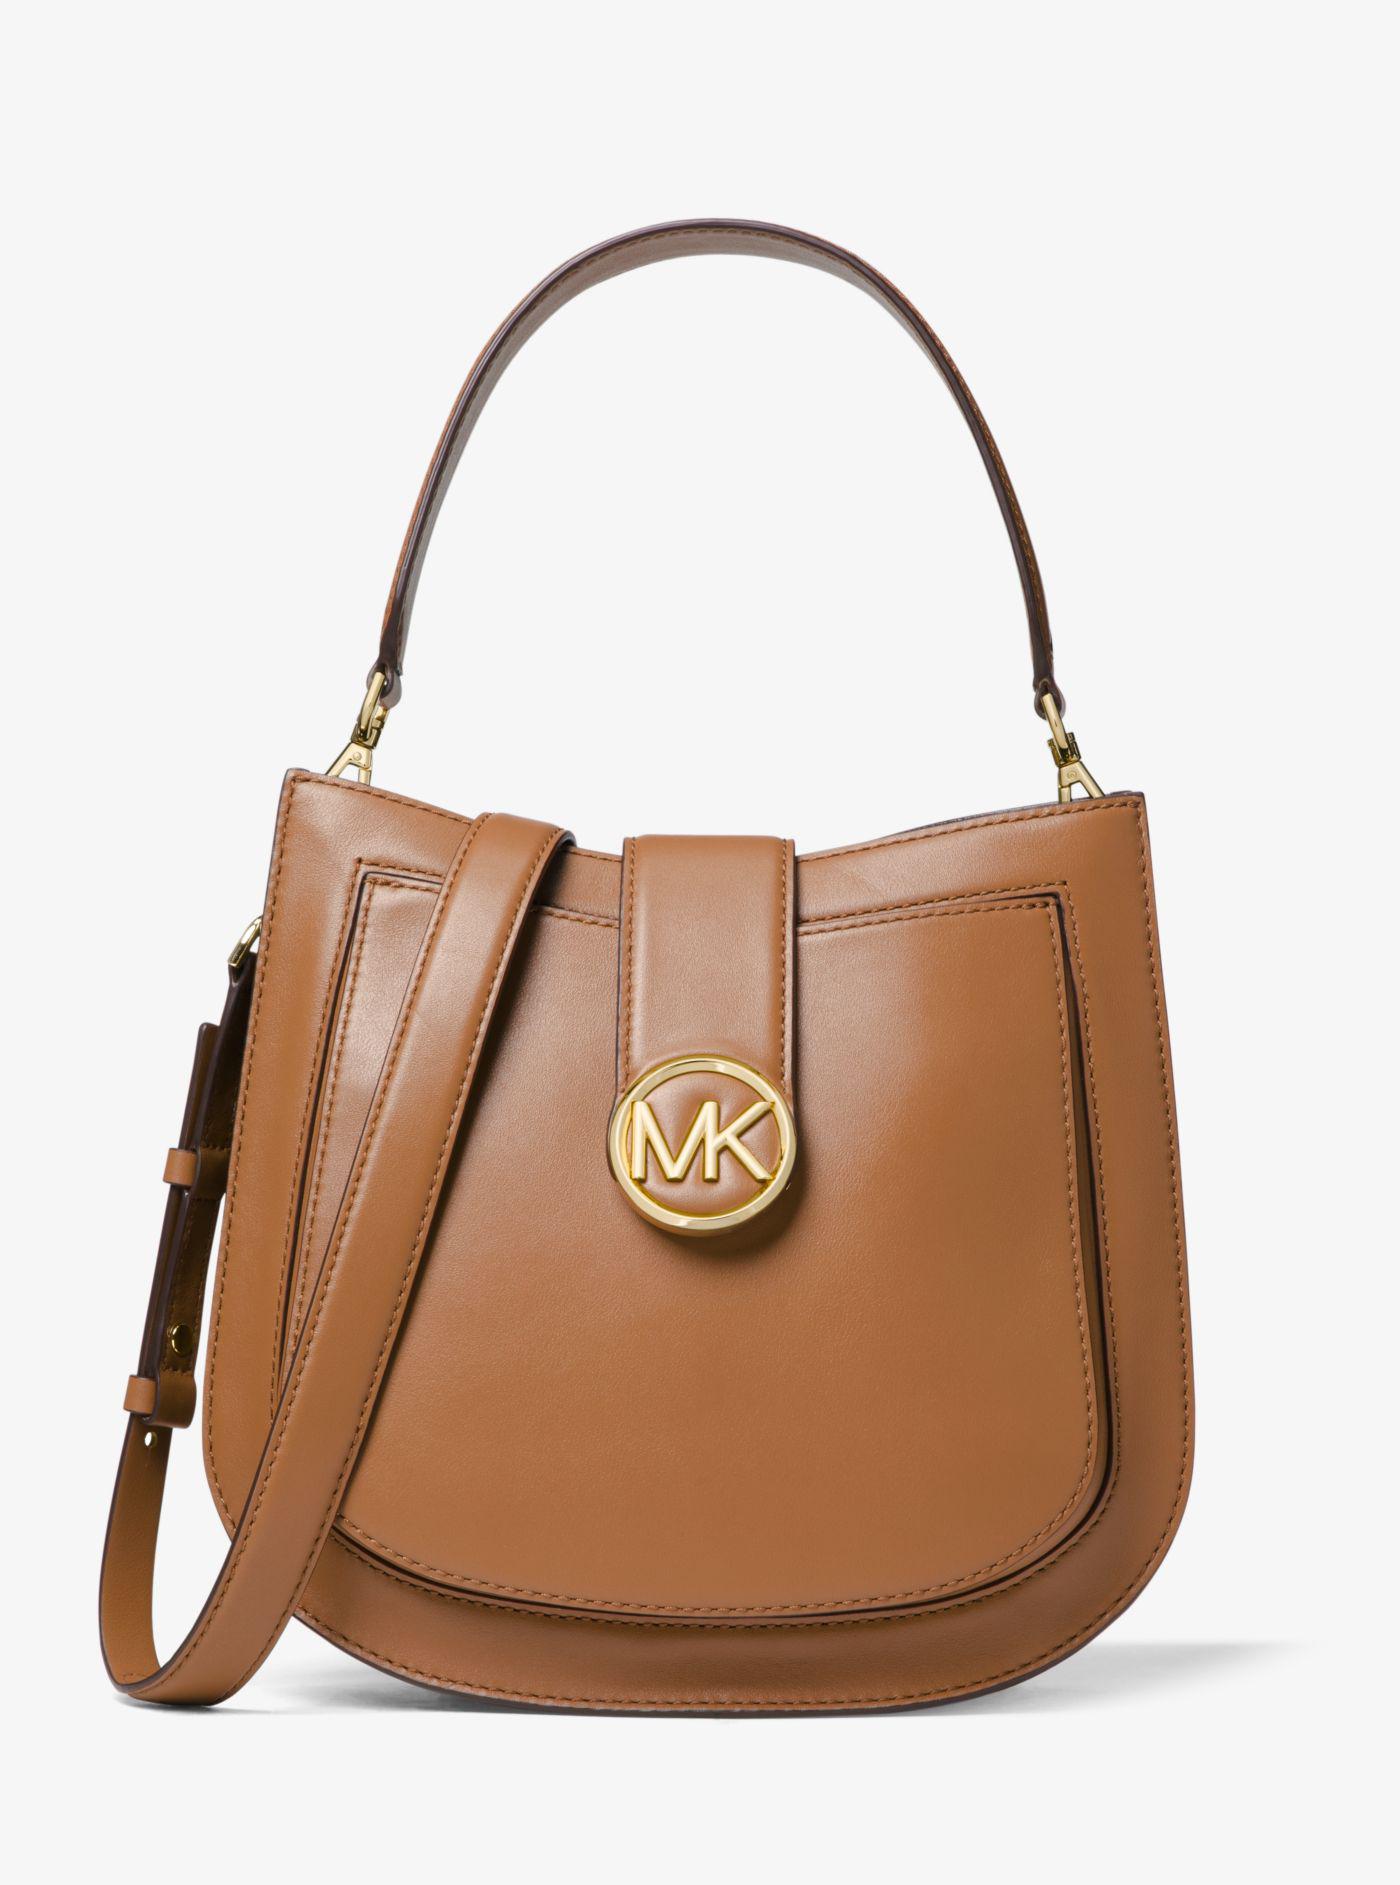 Michael Kors Lillie Medium Leather Shoulder Bag in Brown - Lyst